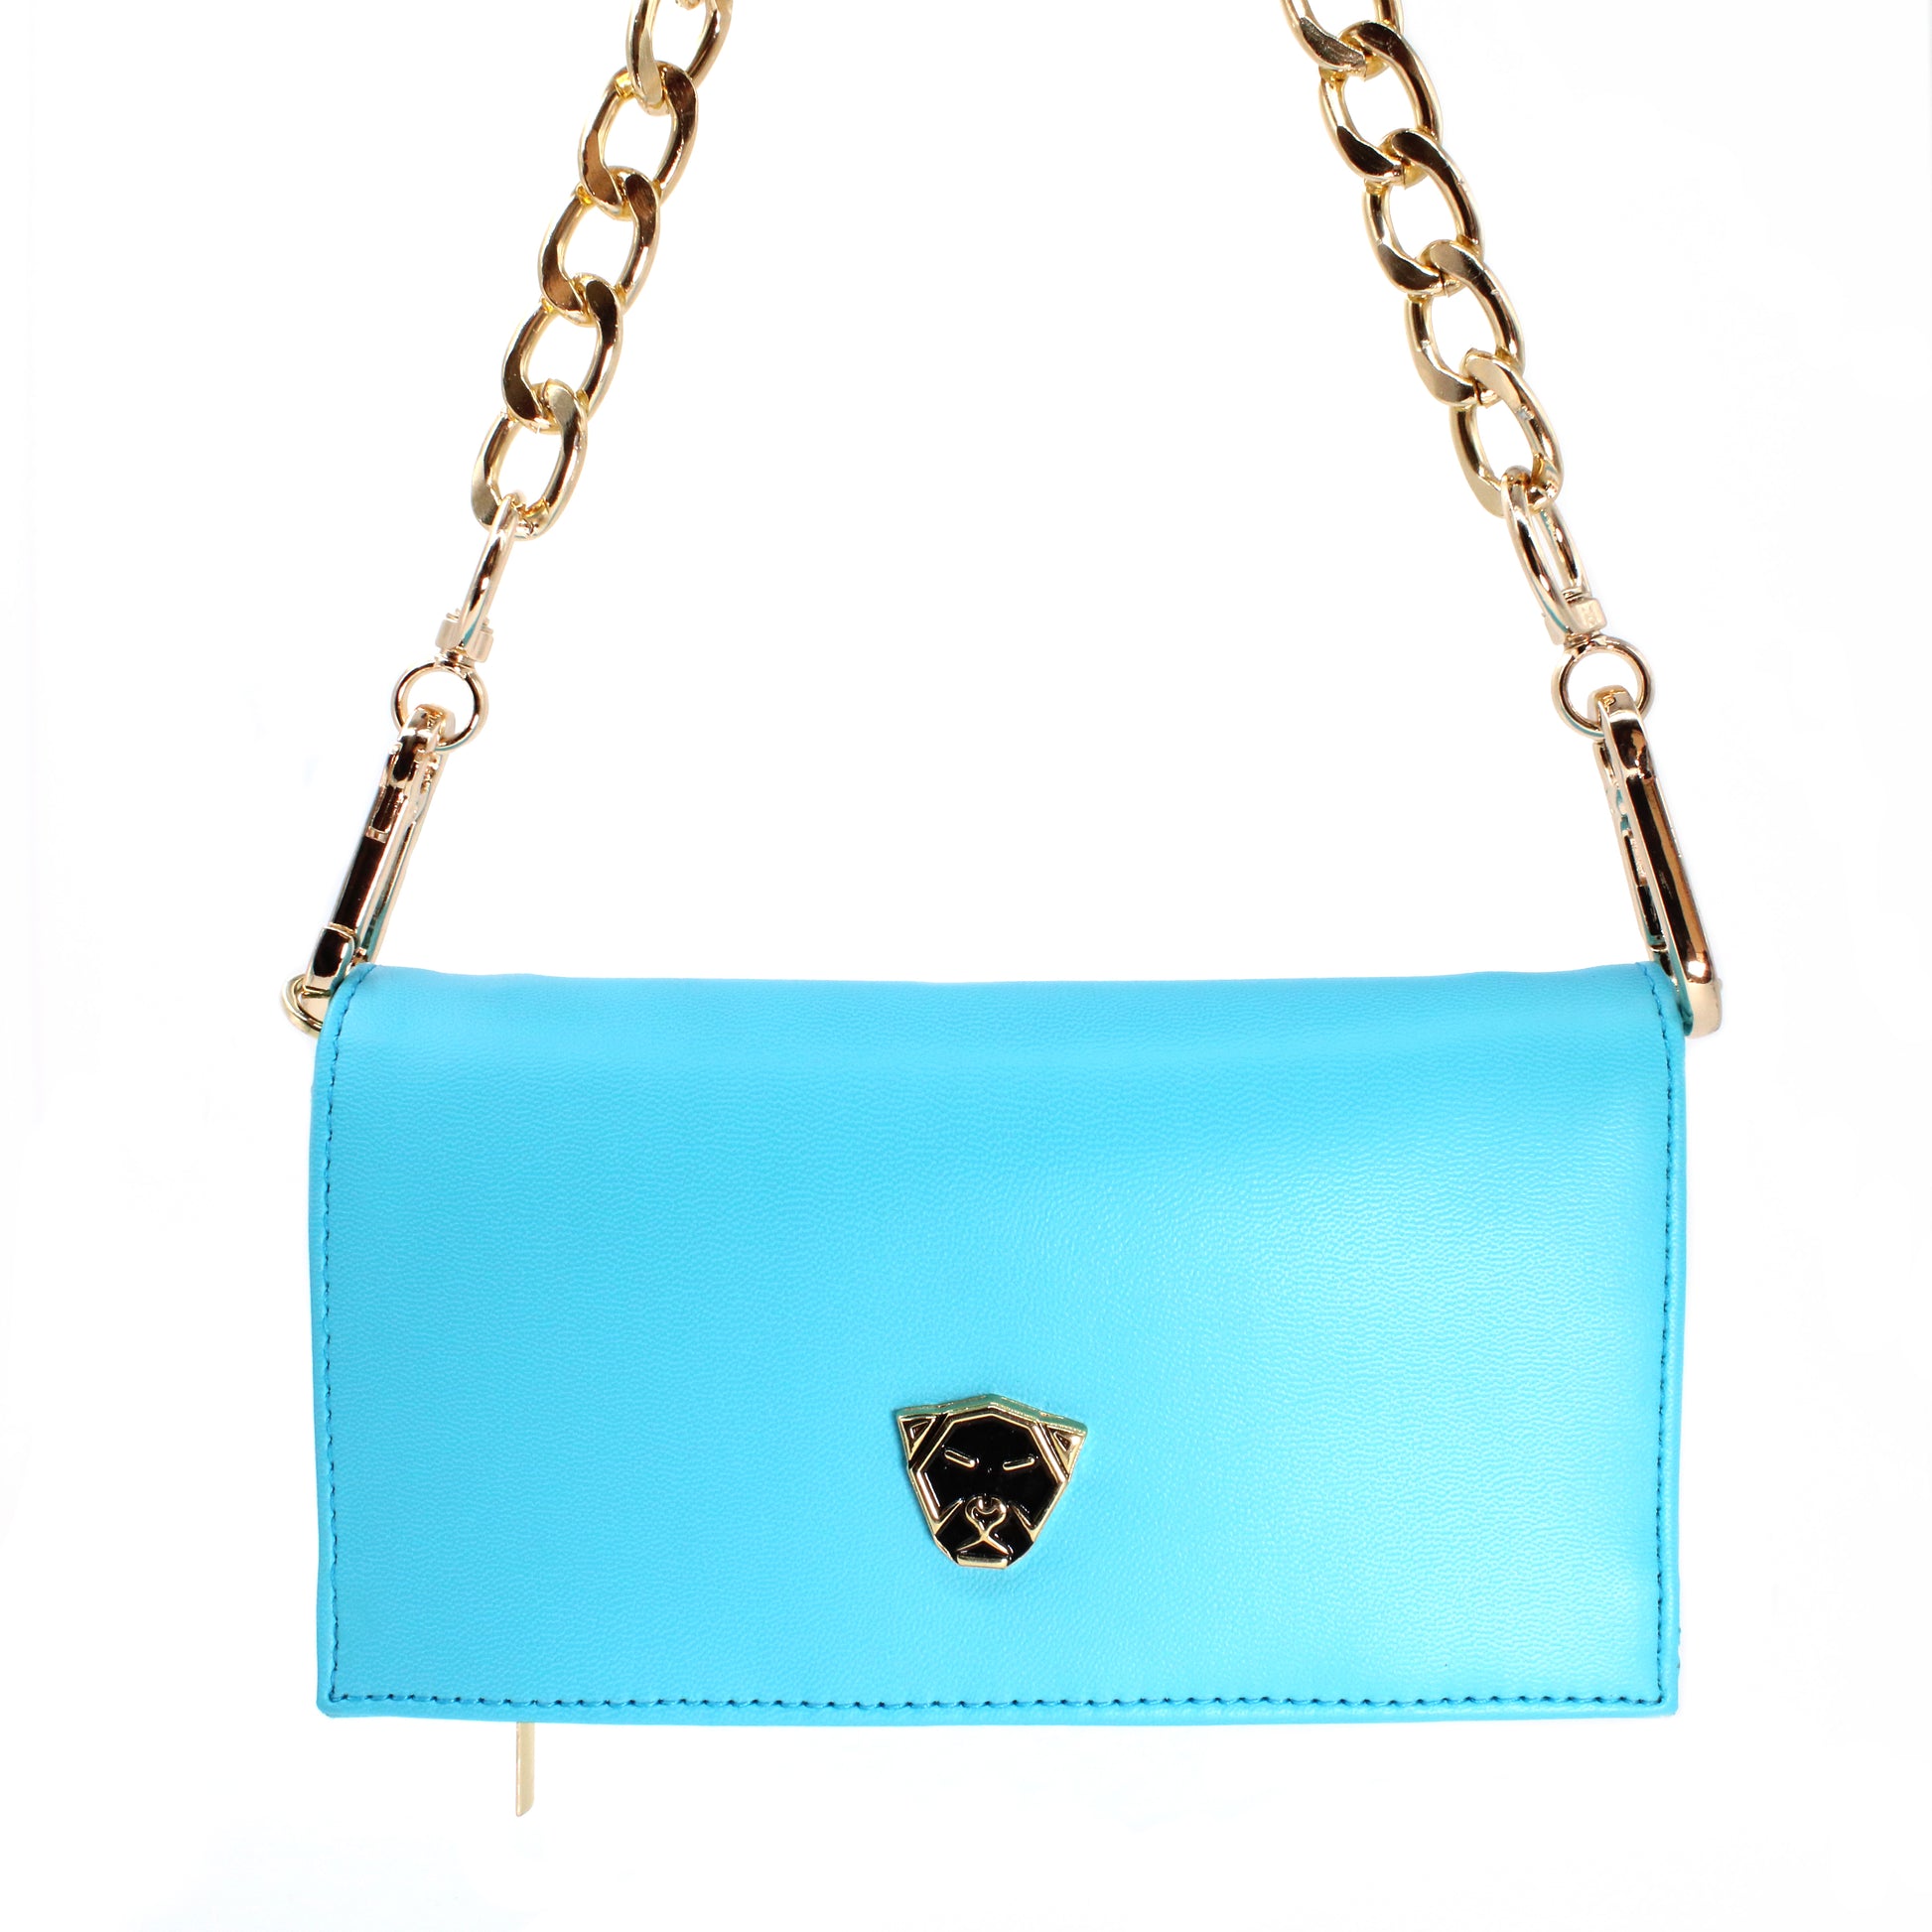 Bolsa mini azul de piel sintética - Glowa bandolera cruzada bag casual elegante de mano